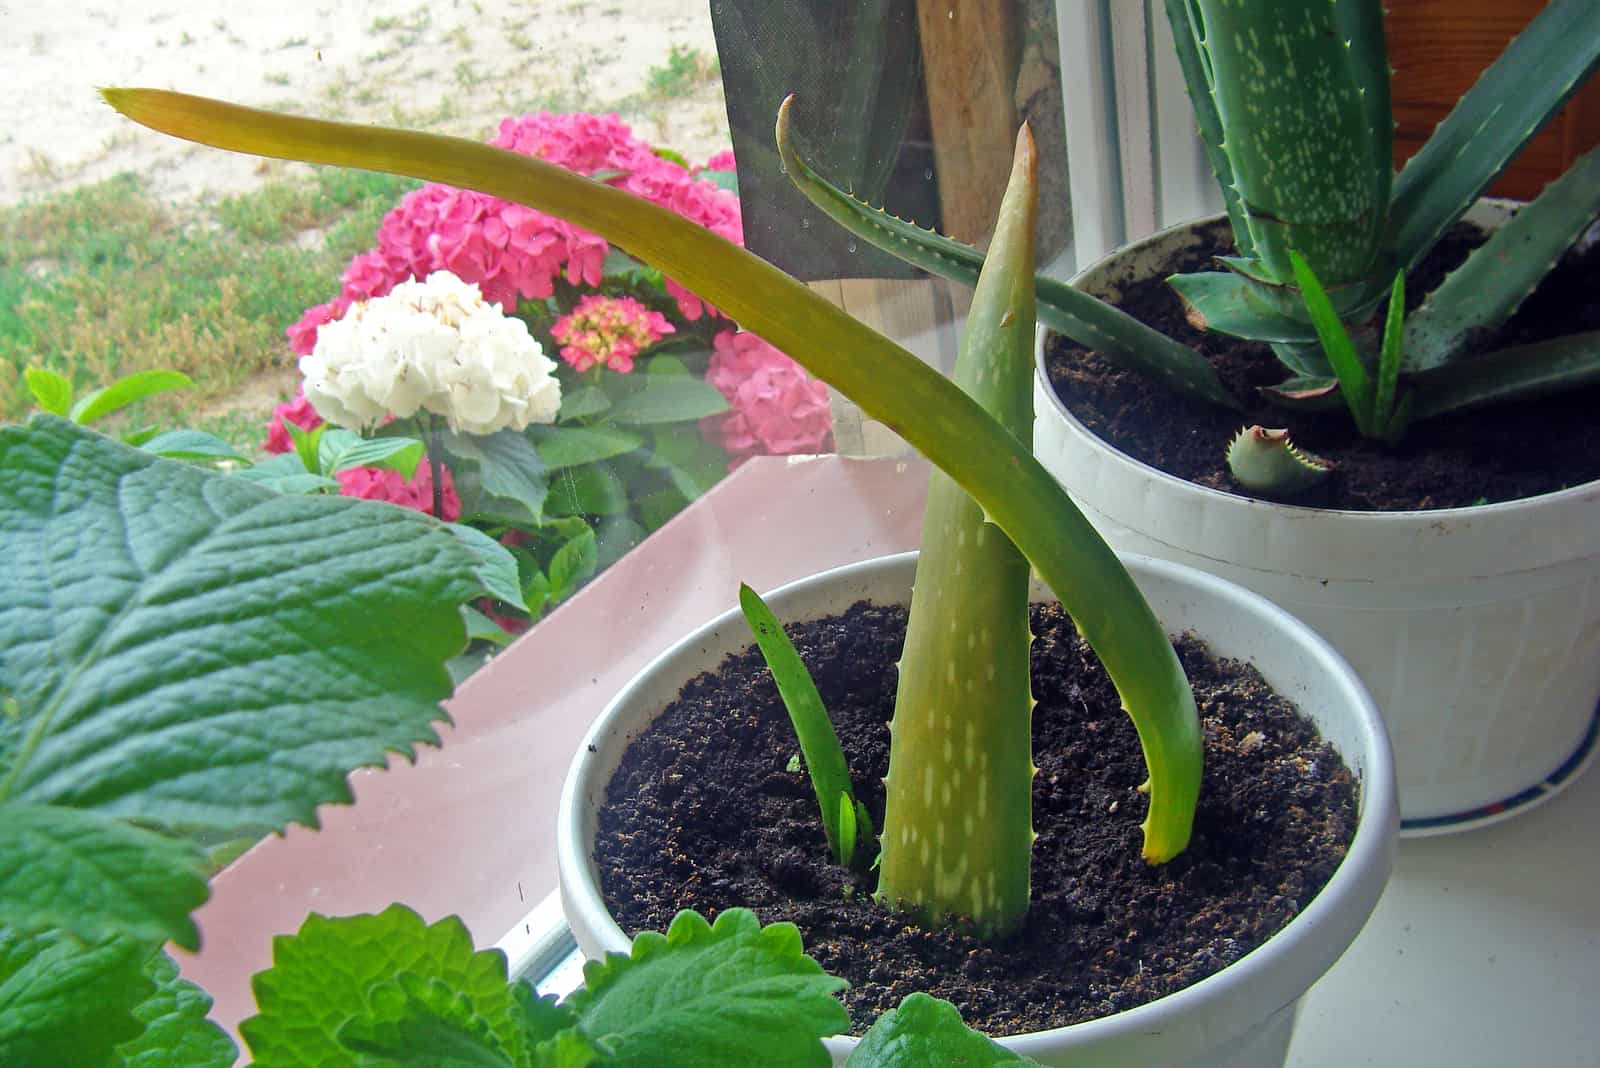 replanted aloe vera in pot by window